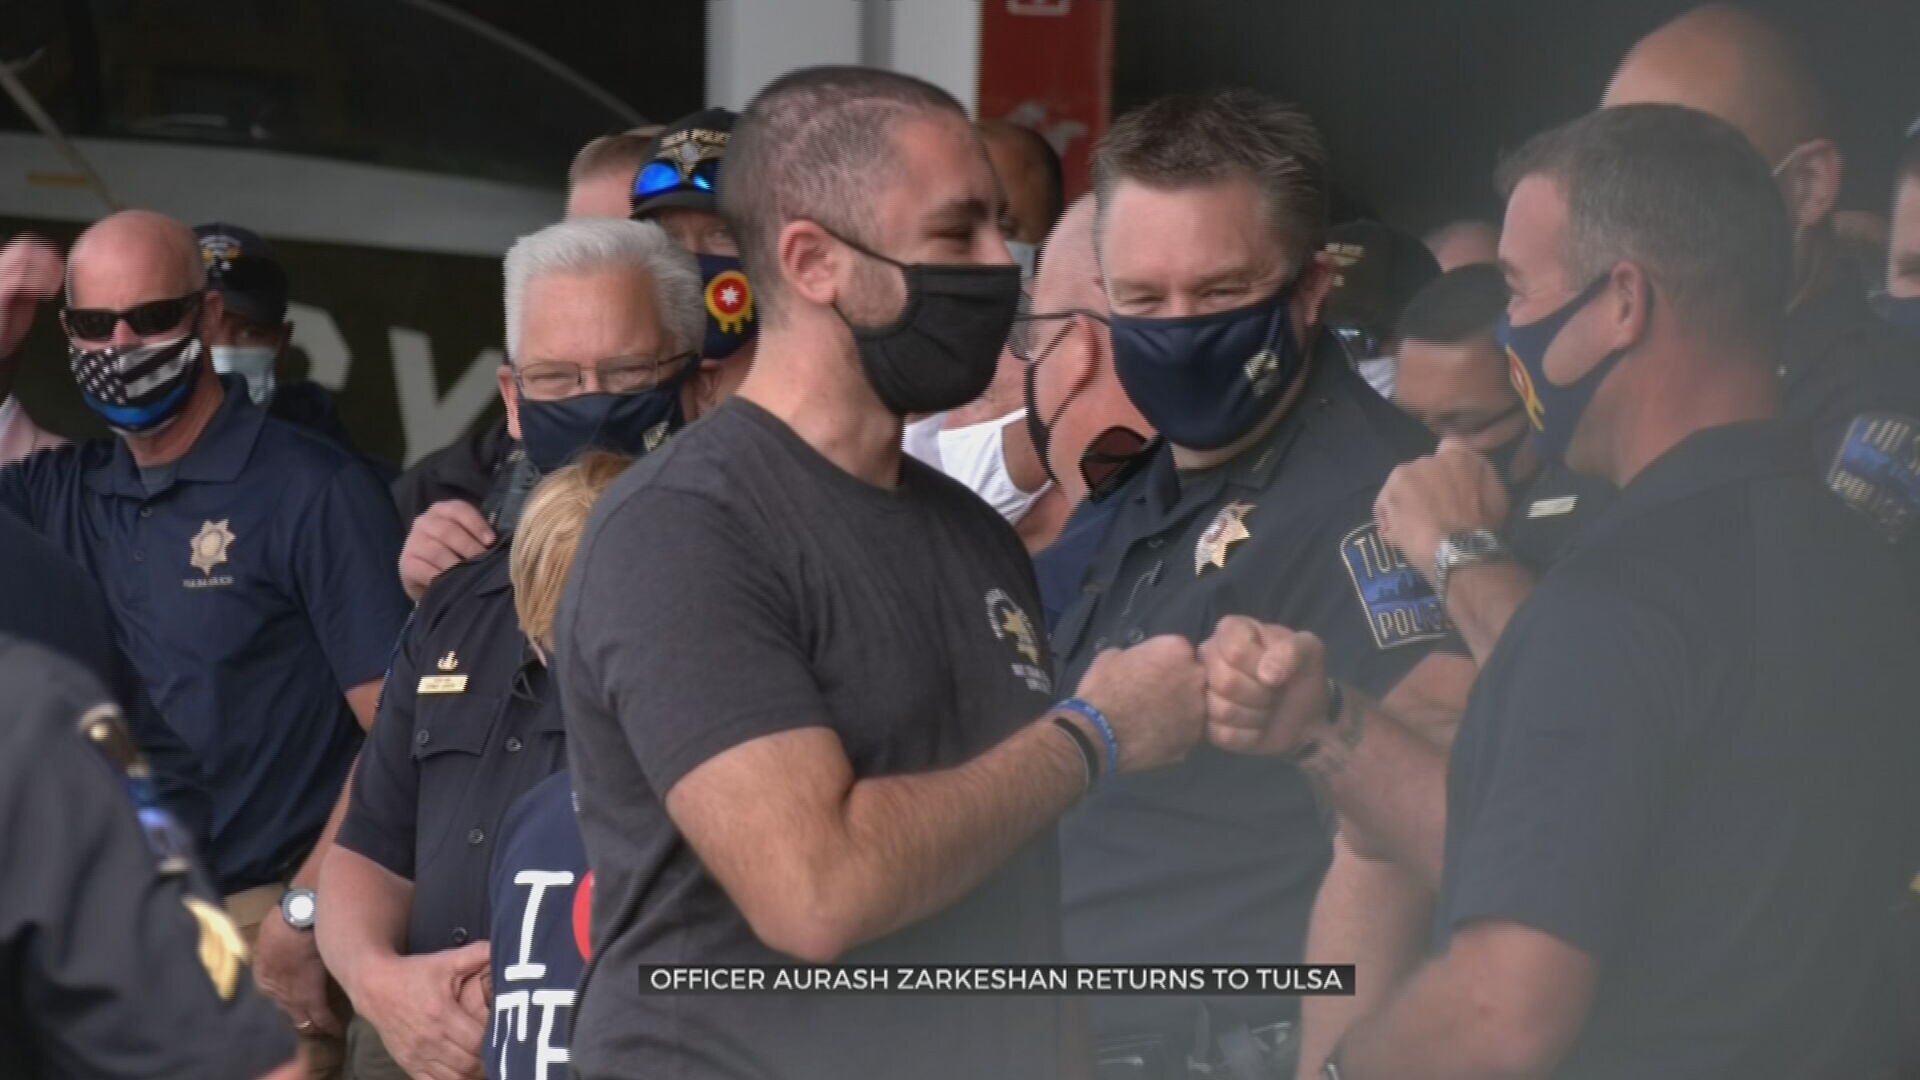 Tulsa Police Officer Zarkeshan Returns Home To Tulsa, Grateful For Support 